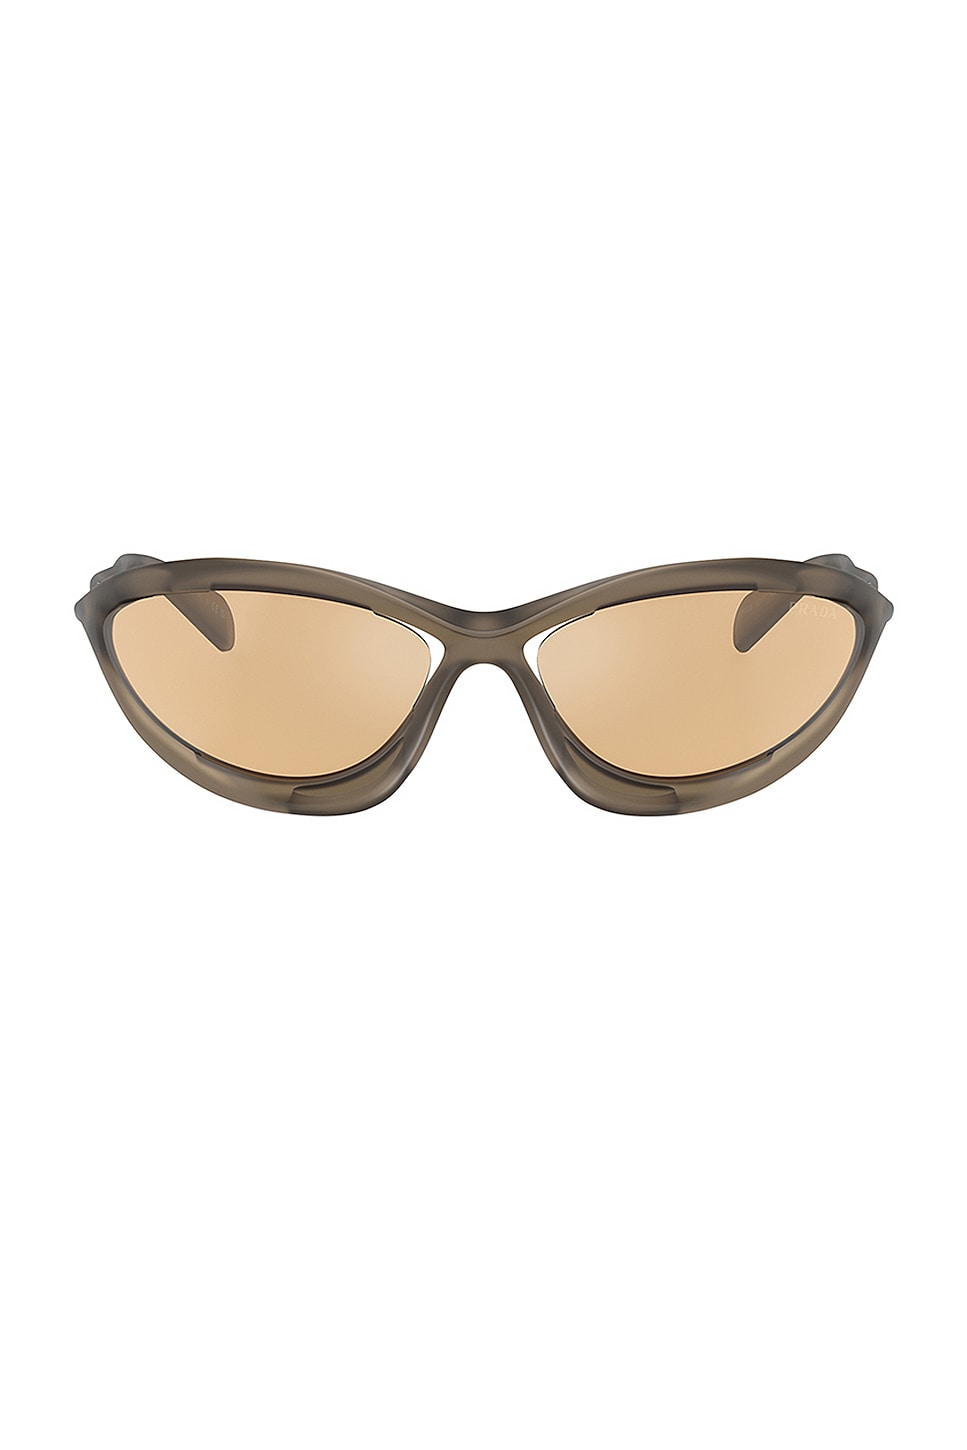 Prada Oval Sunglasses In Brown